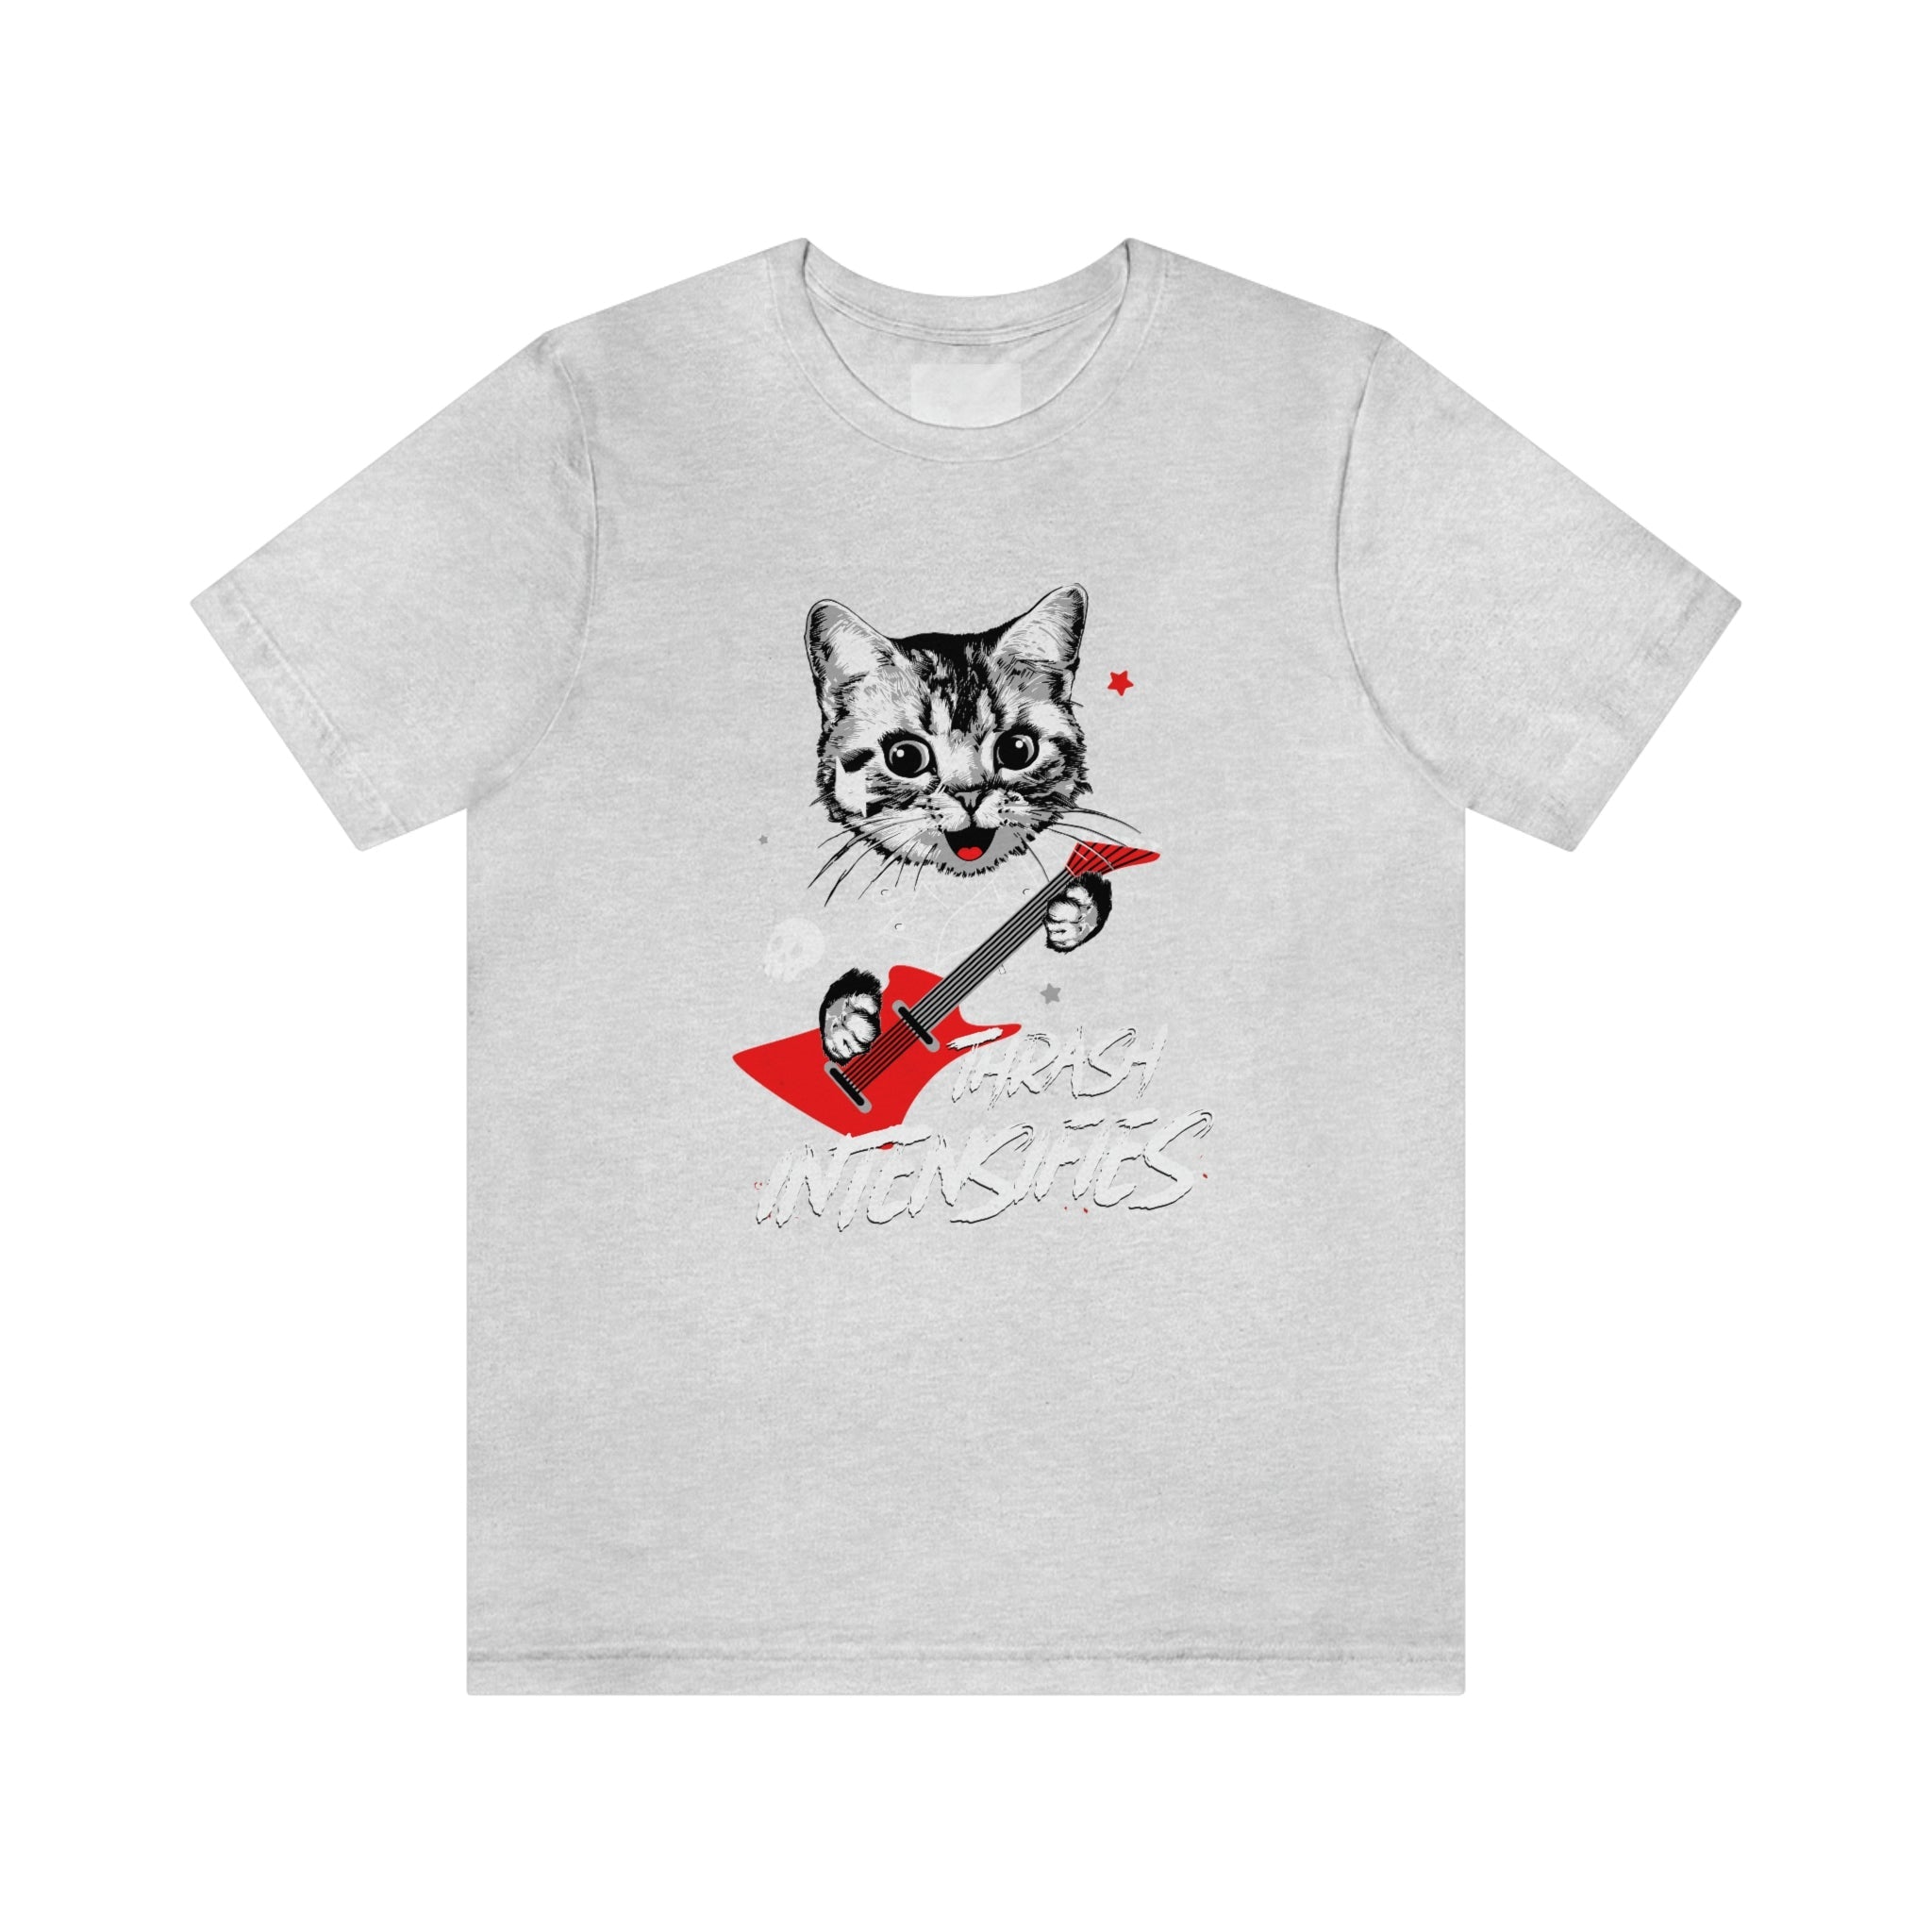 Thrash Intensifies : Unisex 100% Premium Cotton, T-Shirt by Bella+Canvas - A gentler design from our “pet cats” metal t-shirt line.